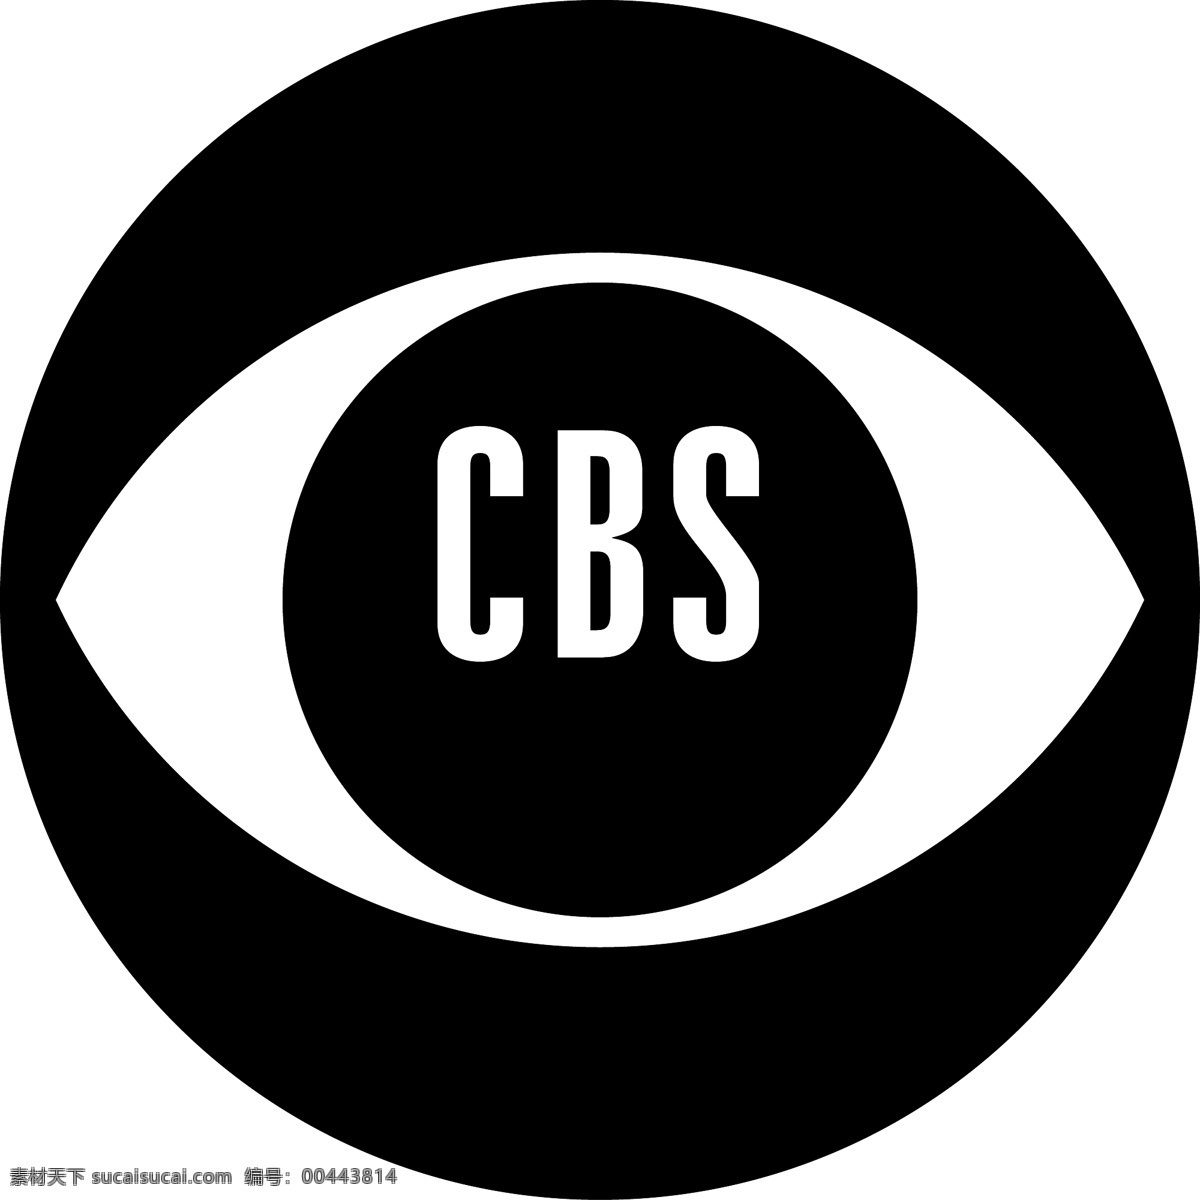 adobe cbs logo2 矢量 矢量cbs cbs的标志 哥伦比亚 广播 公司 logo 雪佛兰 向量 向量cbs 矢量图 建筑家居